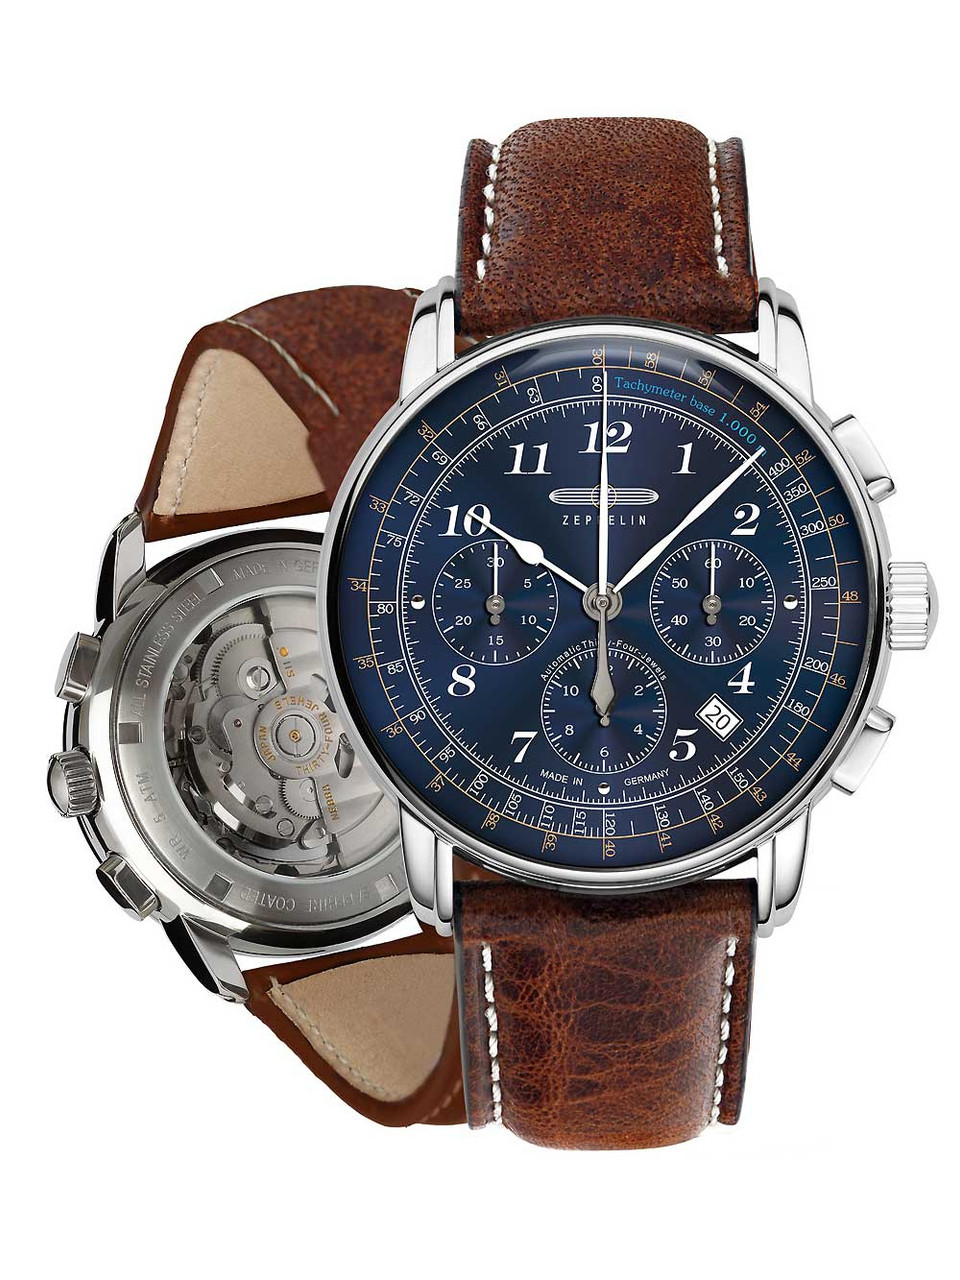 Los | automatic 5ATM Angeles Genuine 7624-3 42mm chrono Watches Zeppelin - LZ126 owlica